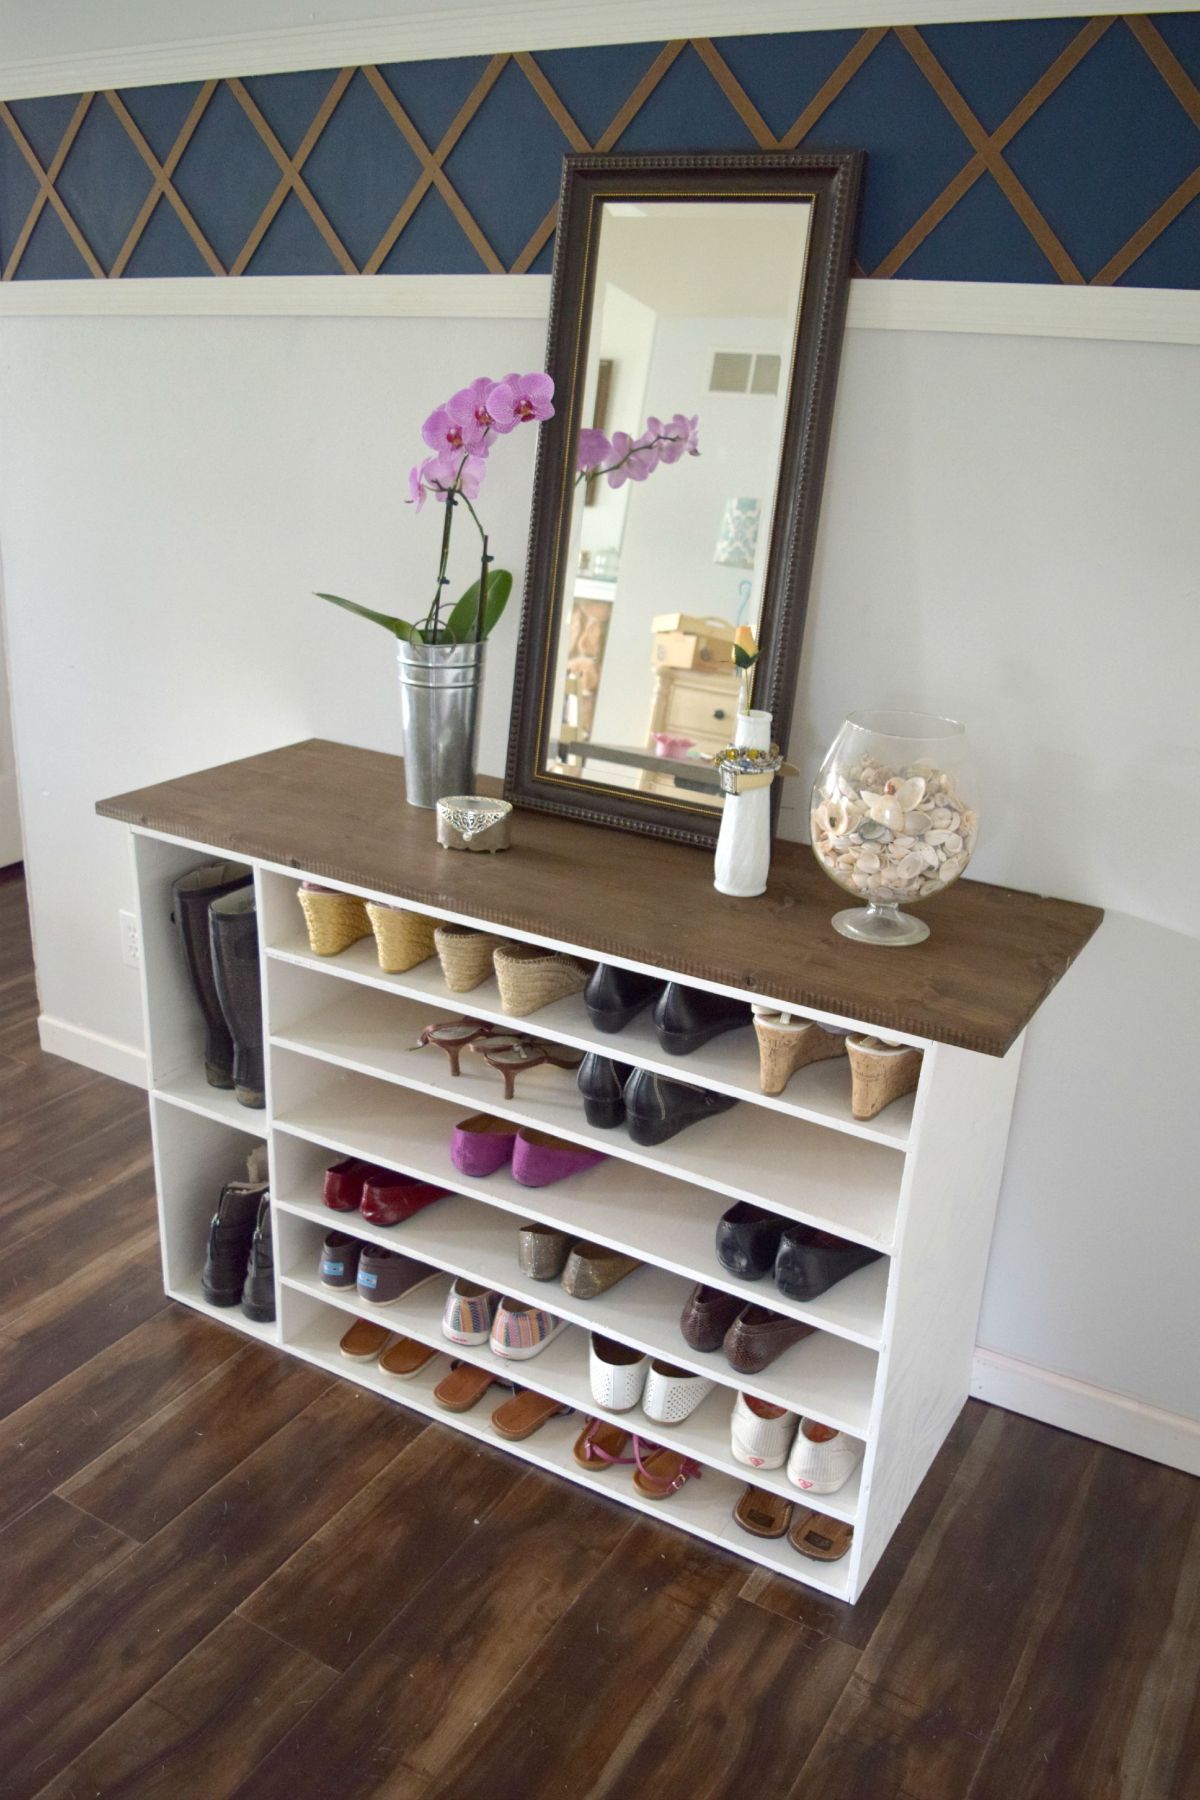 DIY White and Wood Shoe Shelves